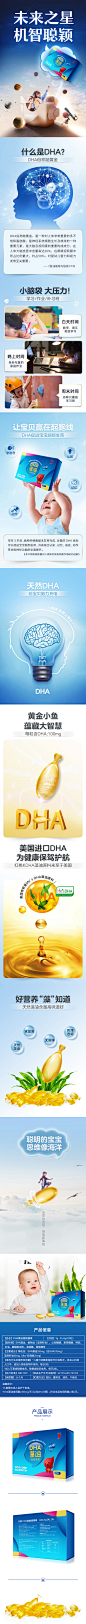 DHA藻油详情